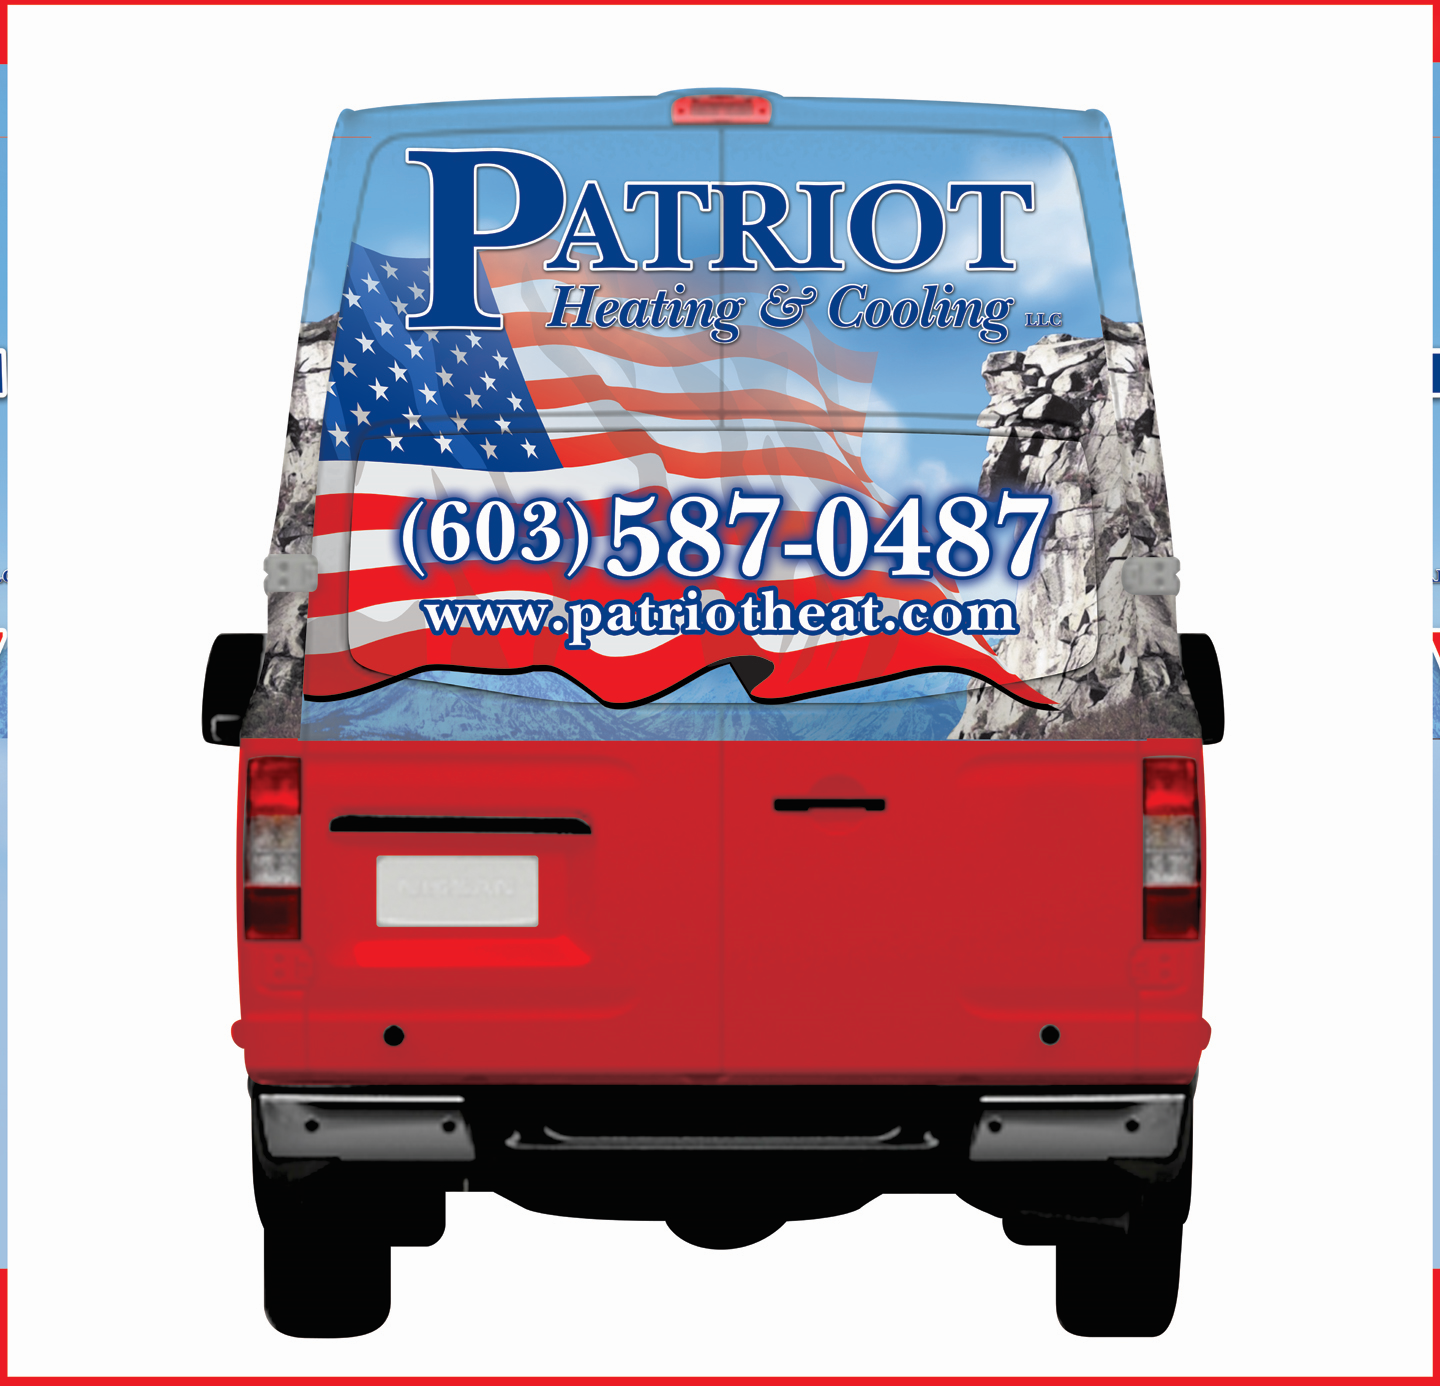 Patriot Heating & Cooling, LLC